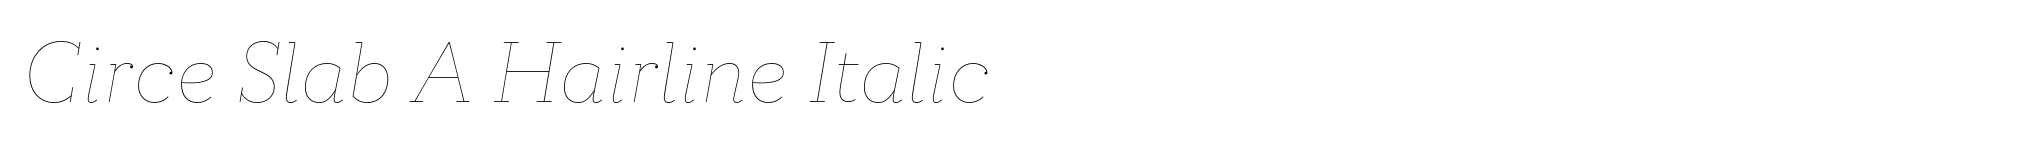 Circe Slab A Hairline Italic image